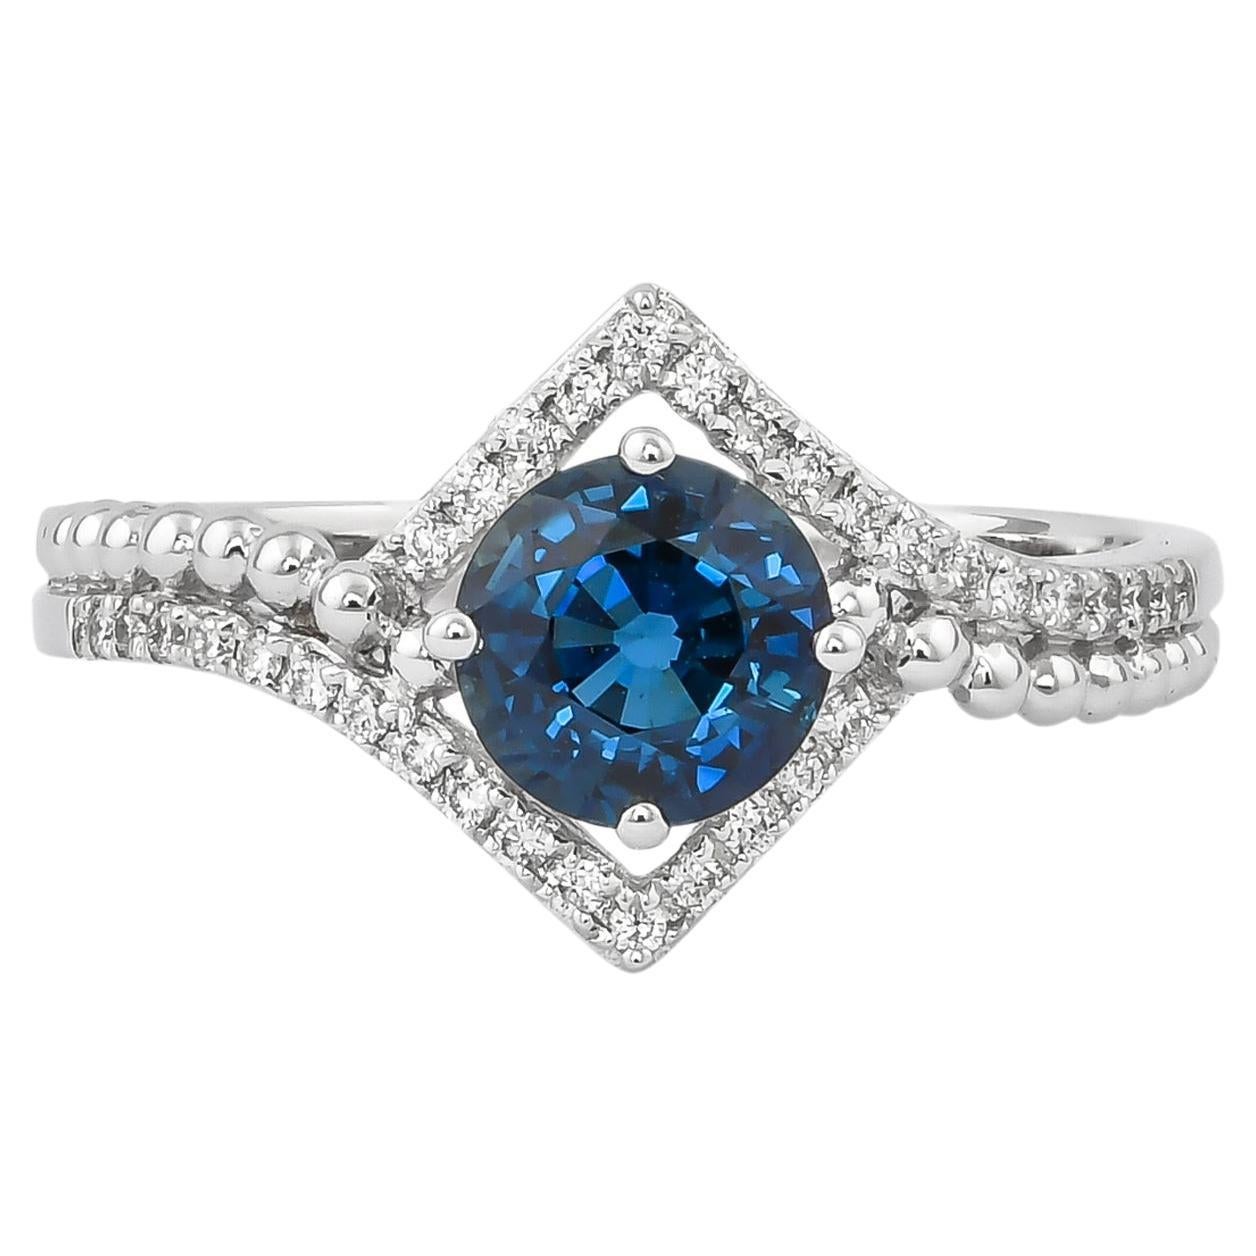 1.1 Carat Blue Sapphire and Diamond Ring in 18 Karat White Gold